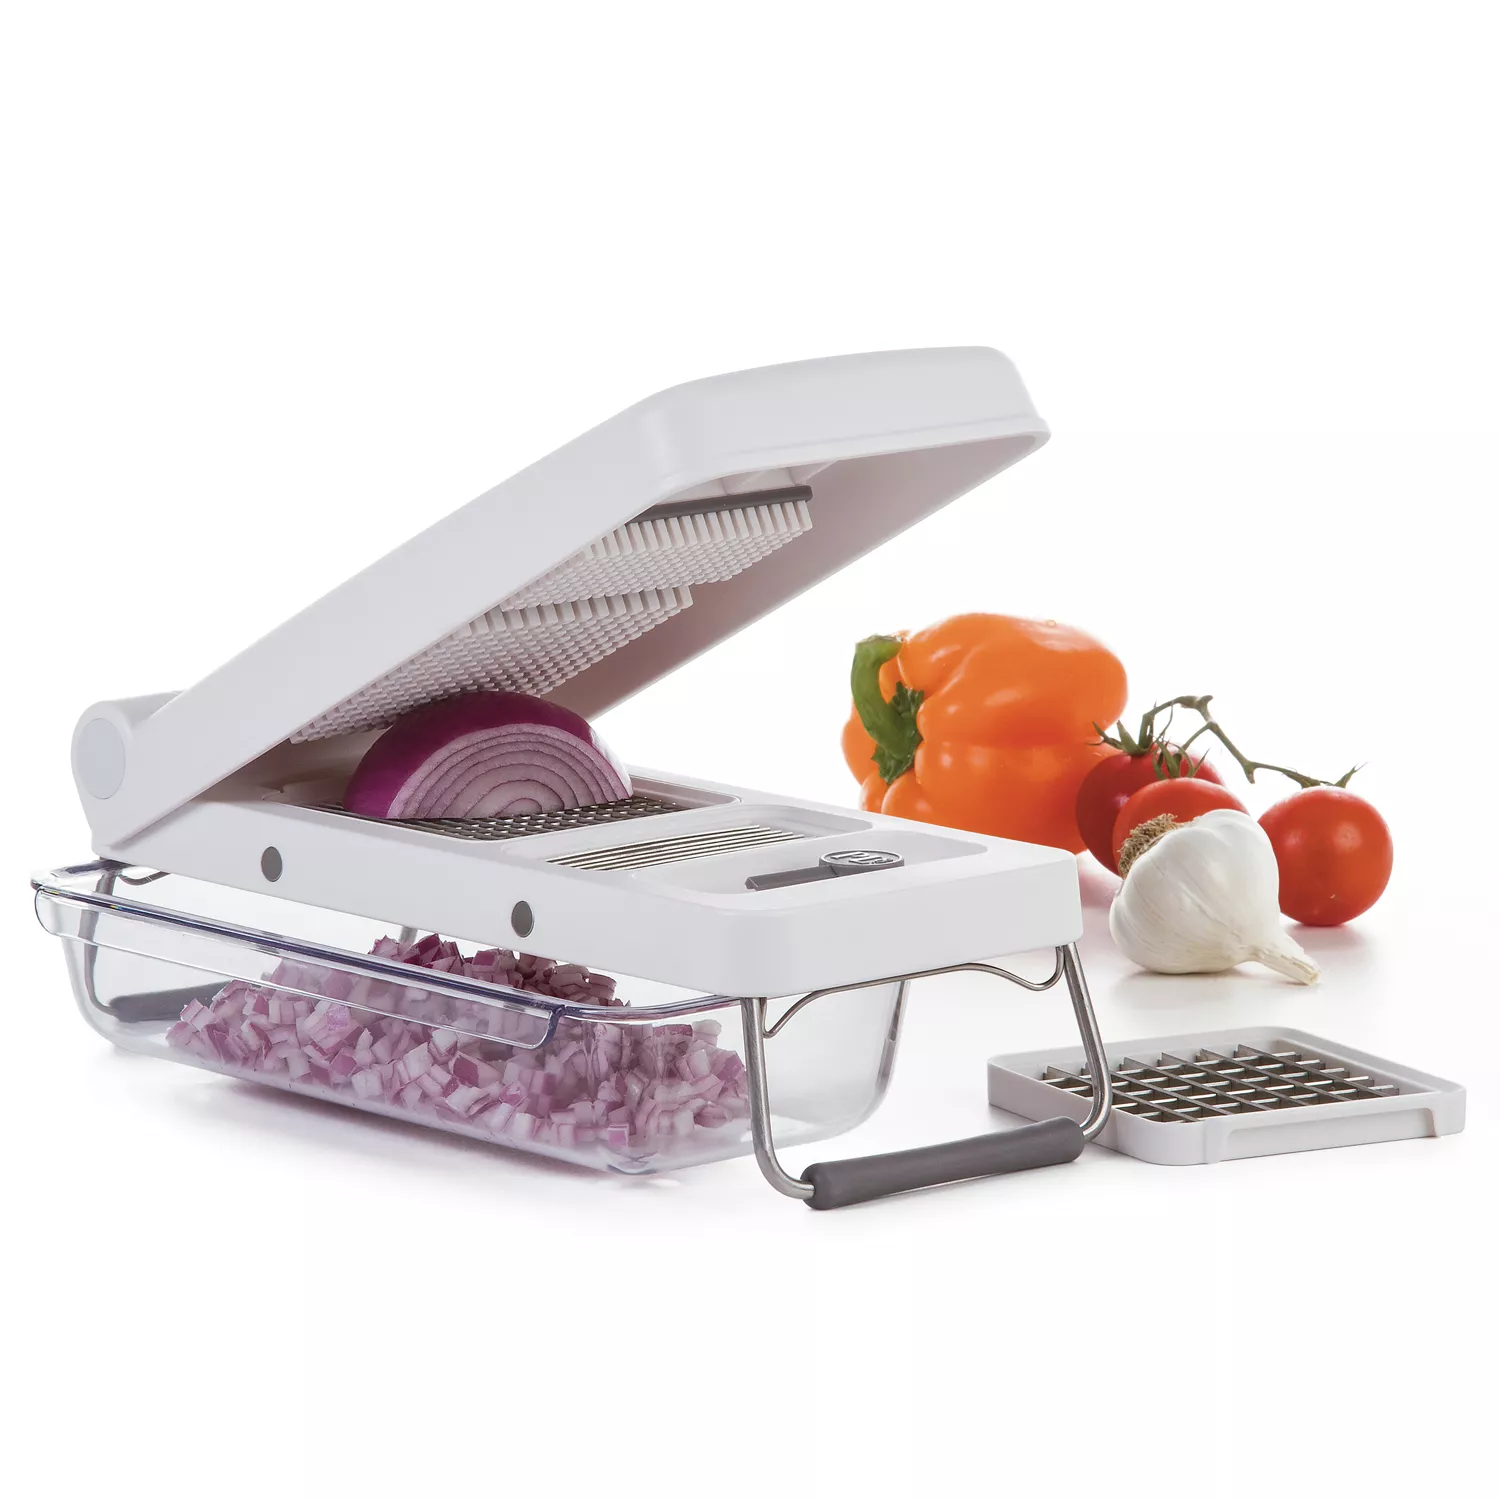 PL8 Professional Kitchen Food Vegetable “slap” Chopper in Gray - NICE